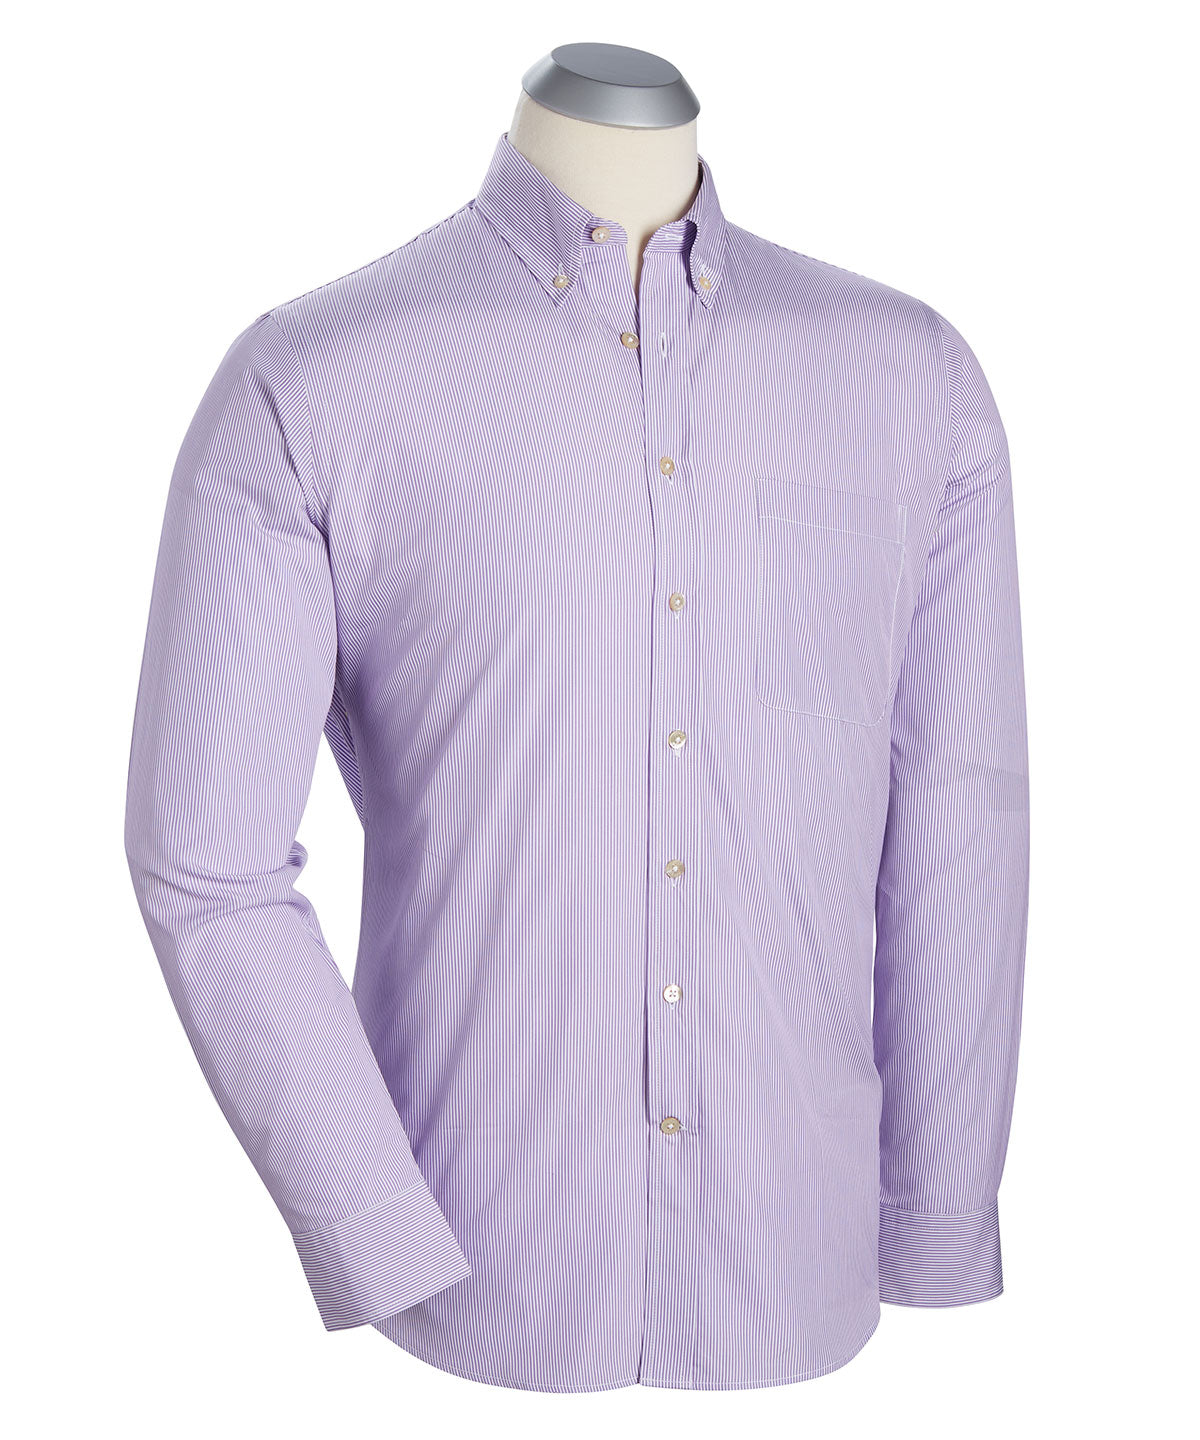 Heritage Italian-Made 100% Broadcloth Cotton Sport Shirt